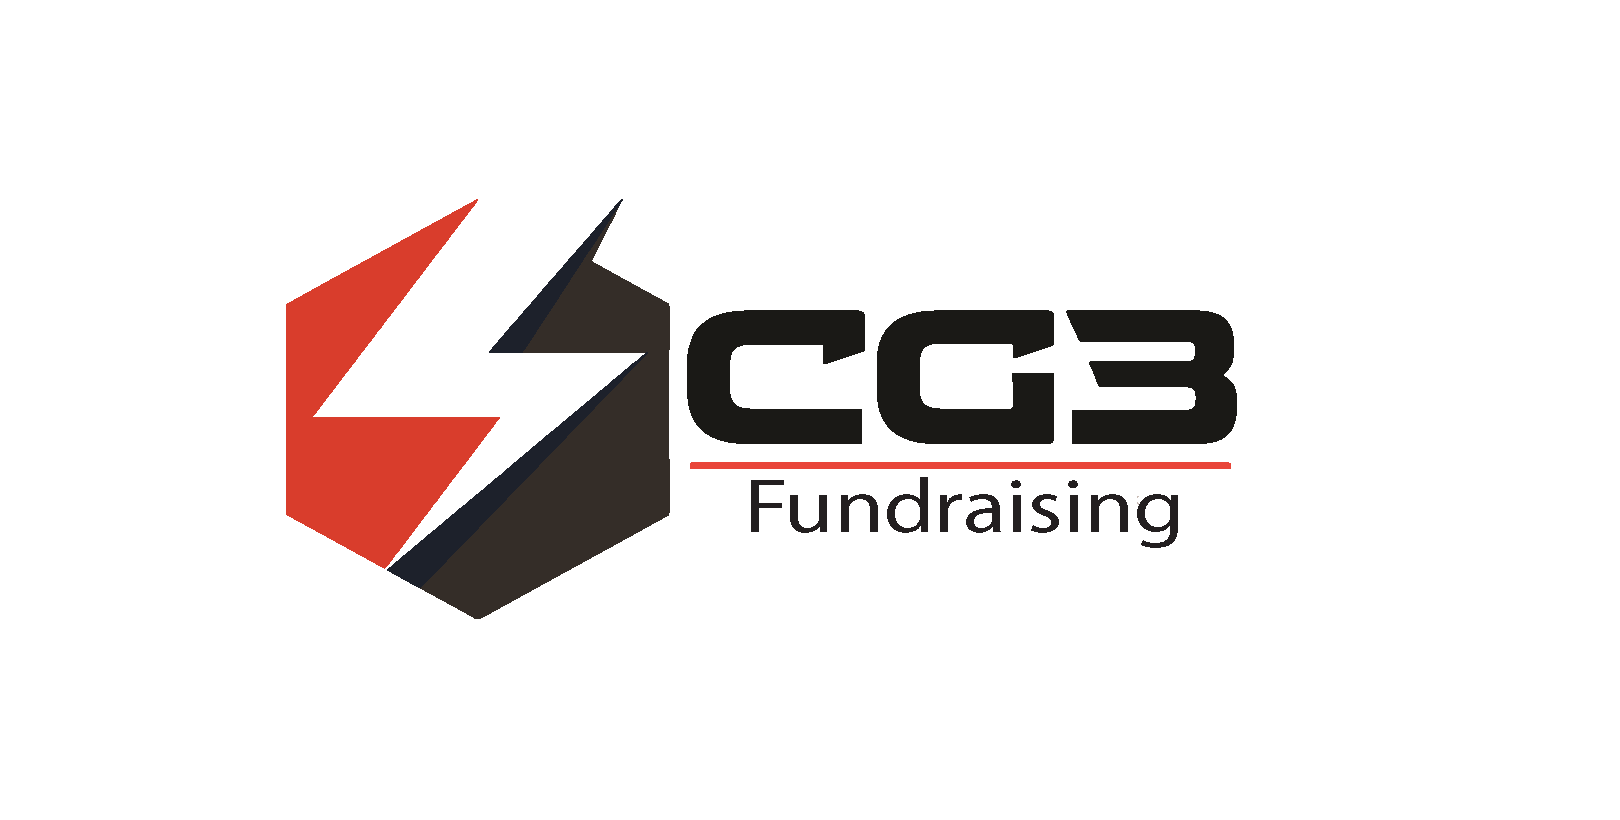 CG3 Fundraising Image